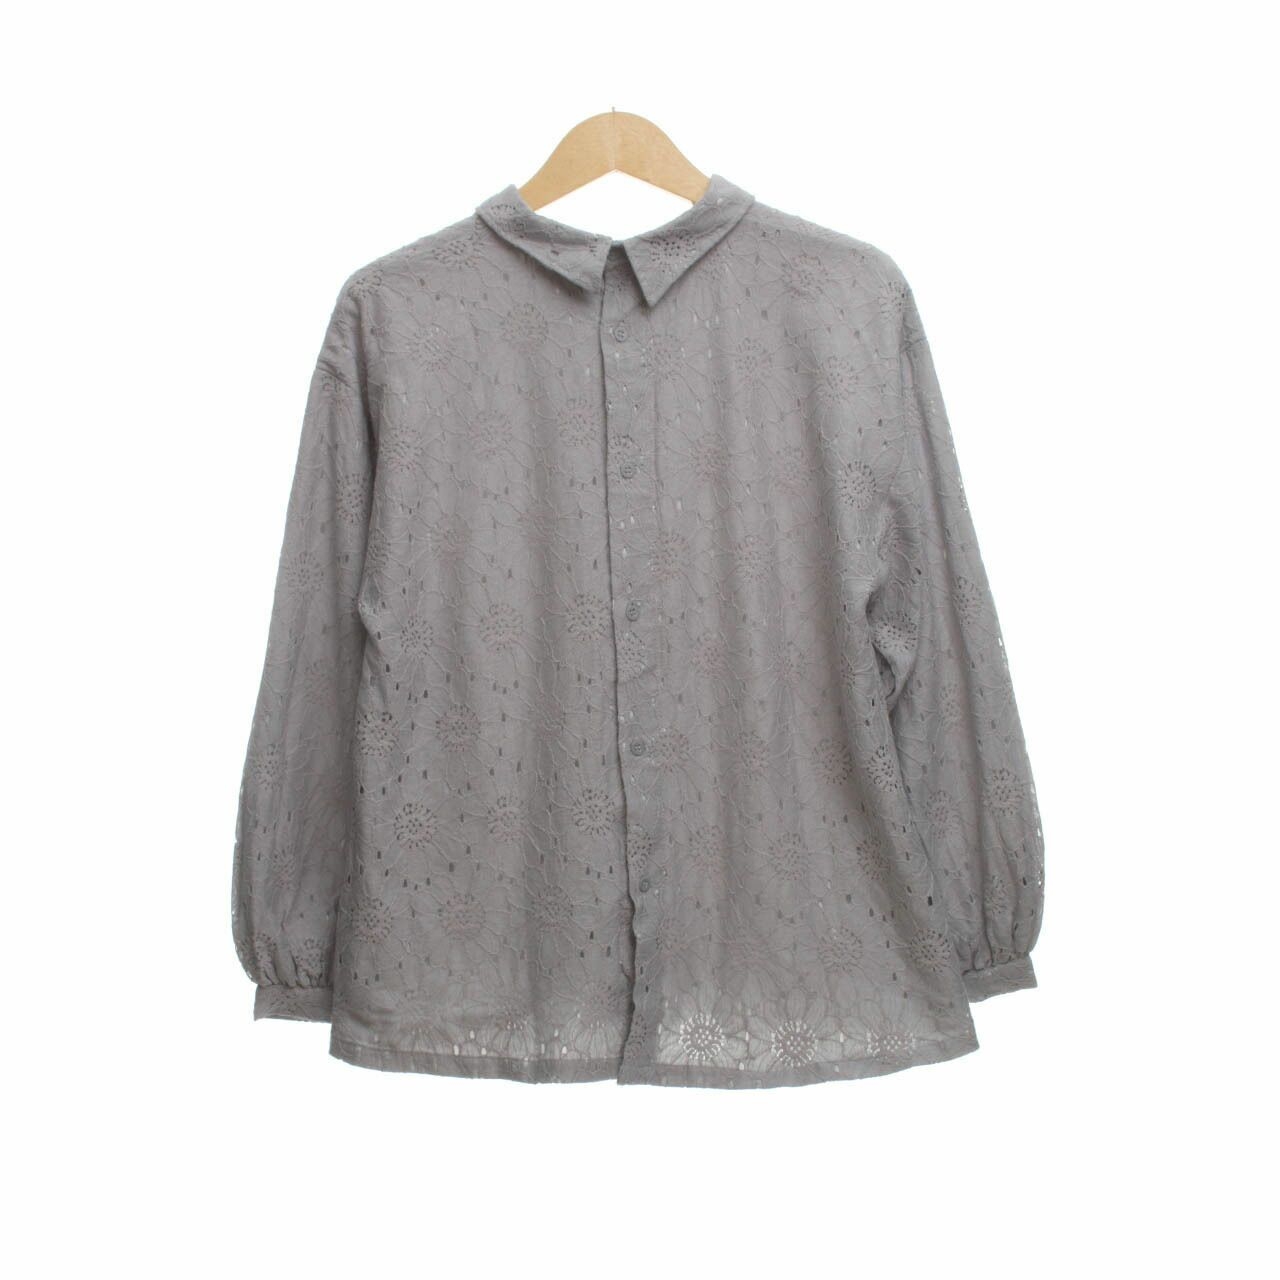 hijabenka Grey Shirt